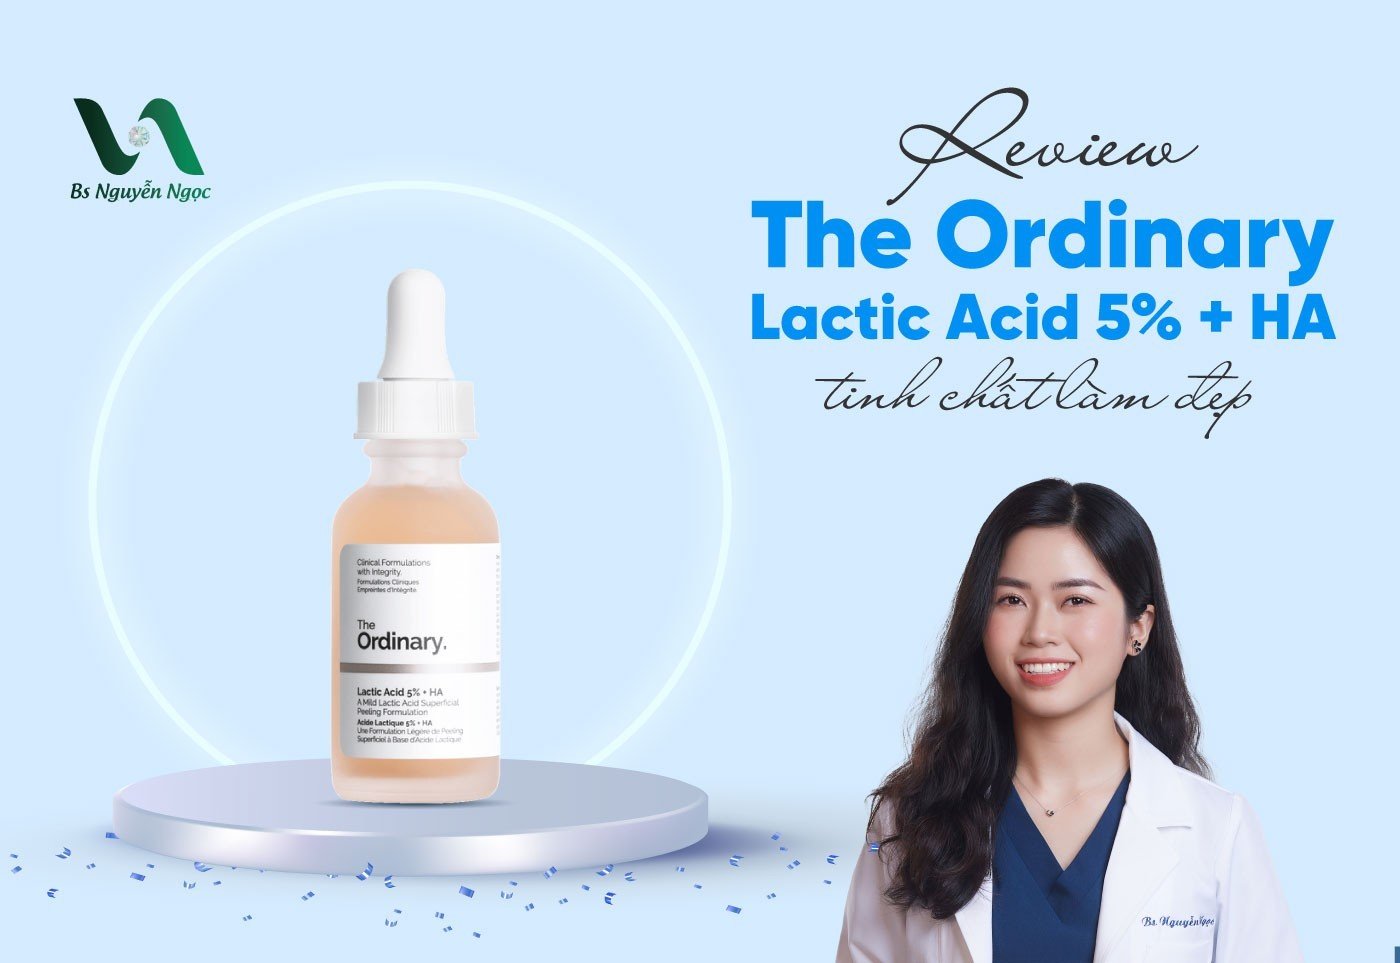 Review The Ordinary Lactic Acid 5% + HA tinh chất làm đẹp